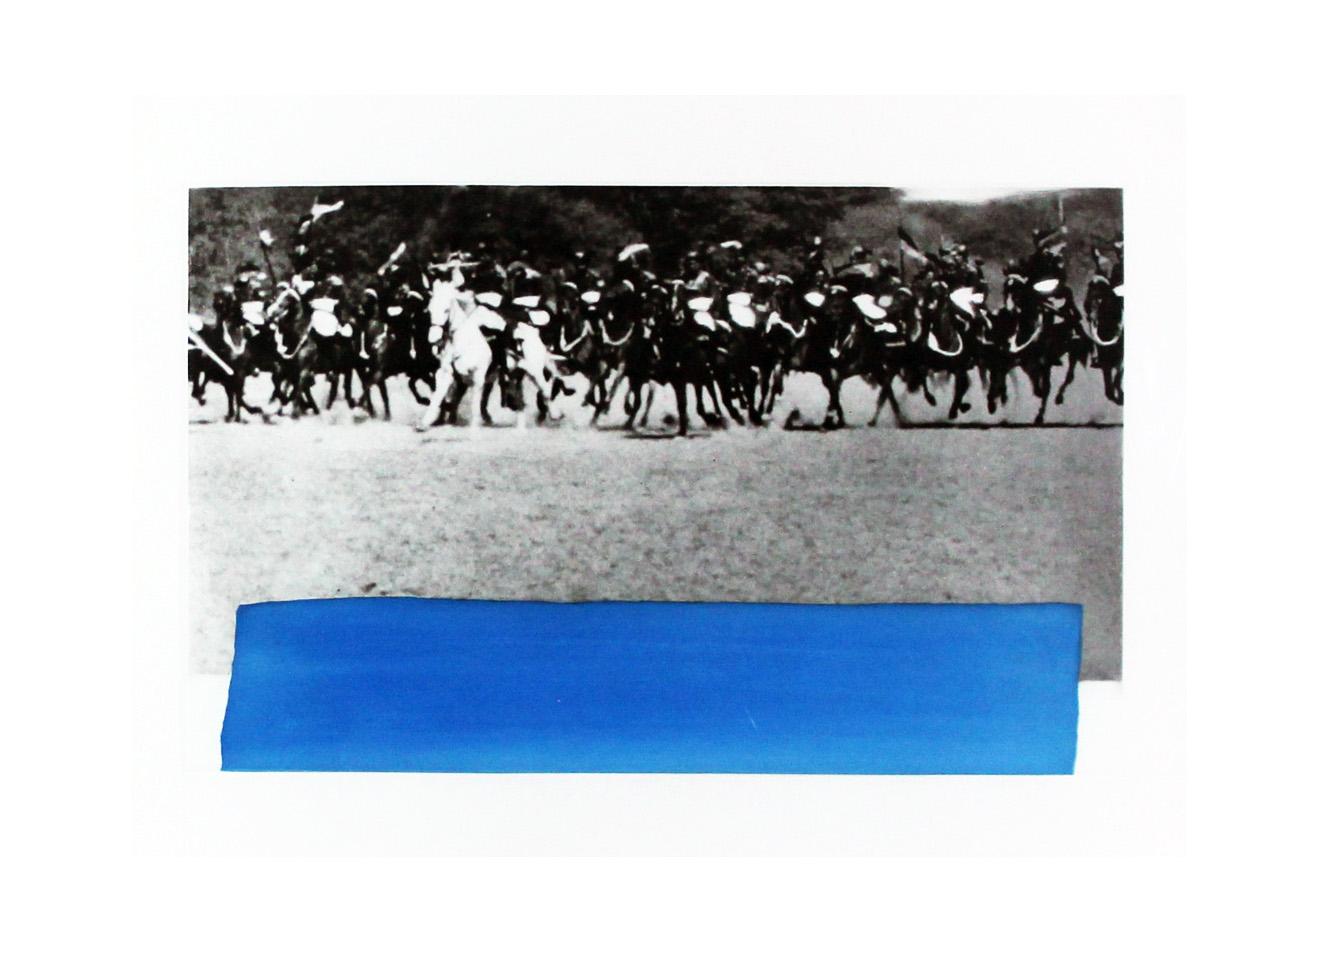 Kavallerie – Print von John Baldessari